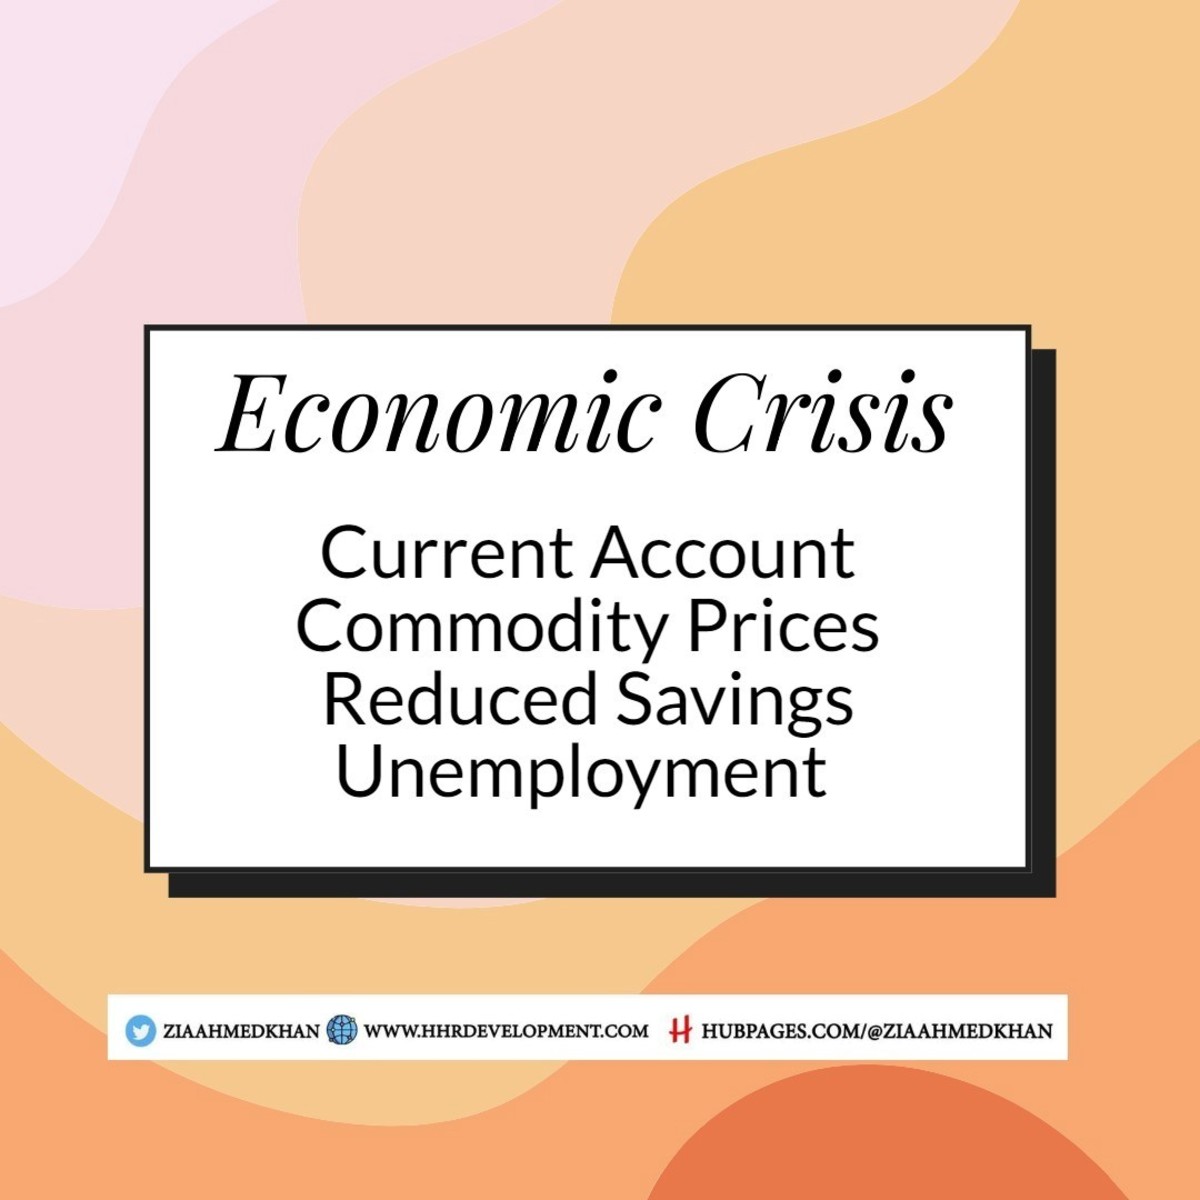 India's Economic Crisis